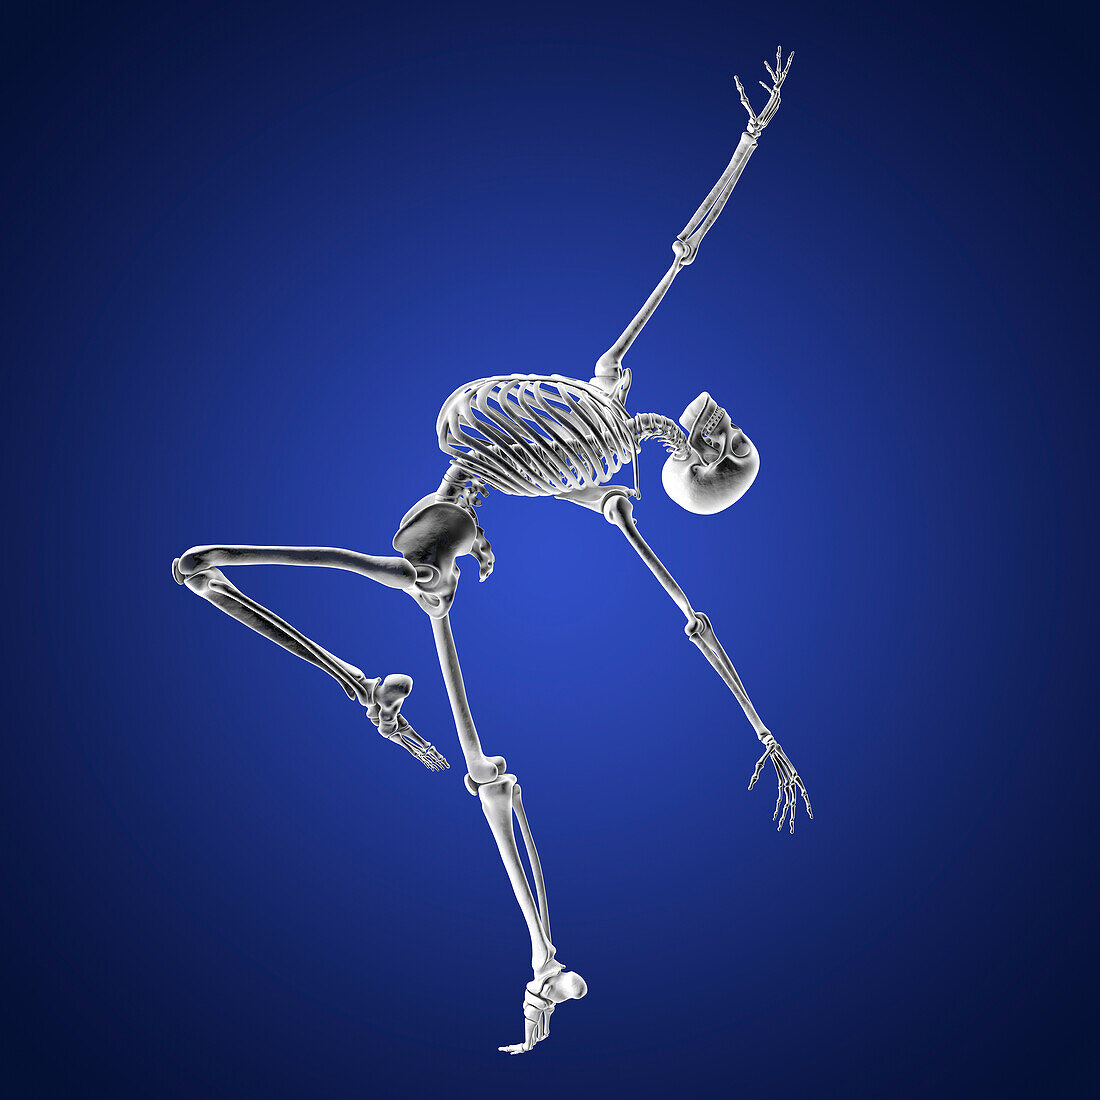 Anatomy of a dancer, illustration